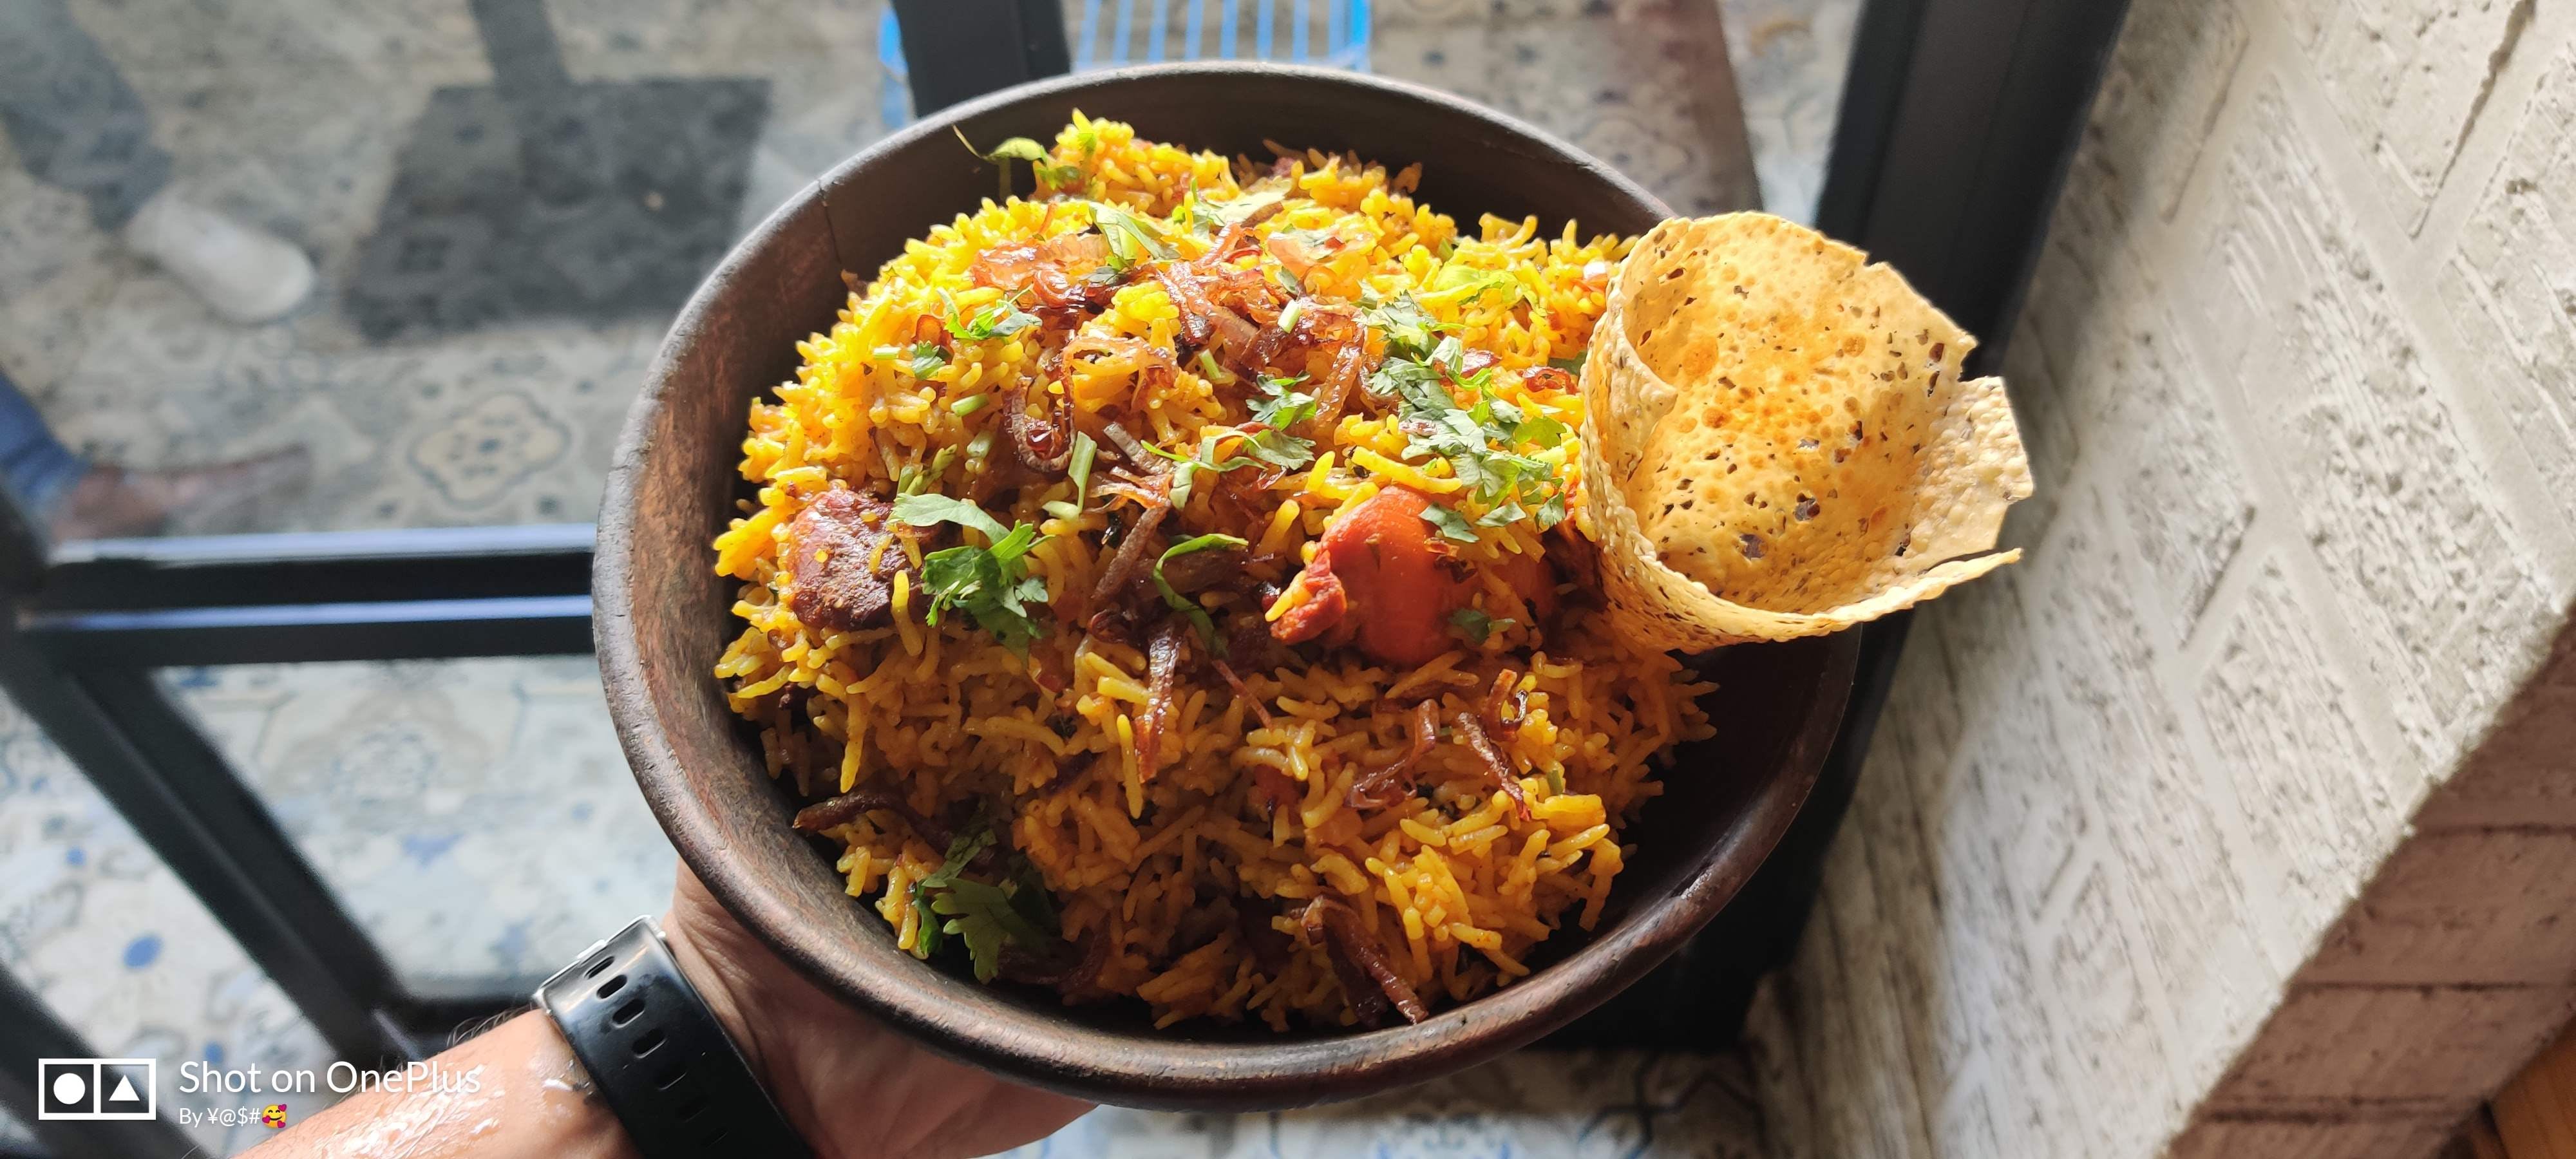 Dish,Food,Cuisine,Biryani,Hyderabadi biriyani,Ingredient,Recipe,Staple food,Kabsa,Produce